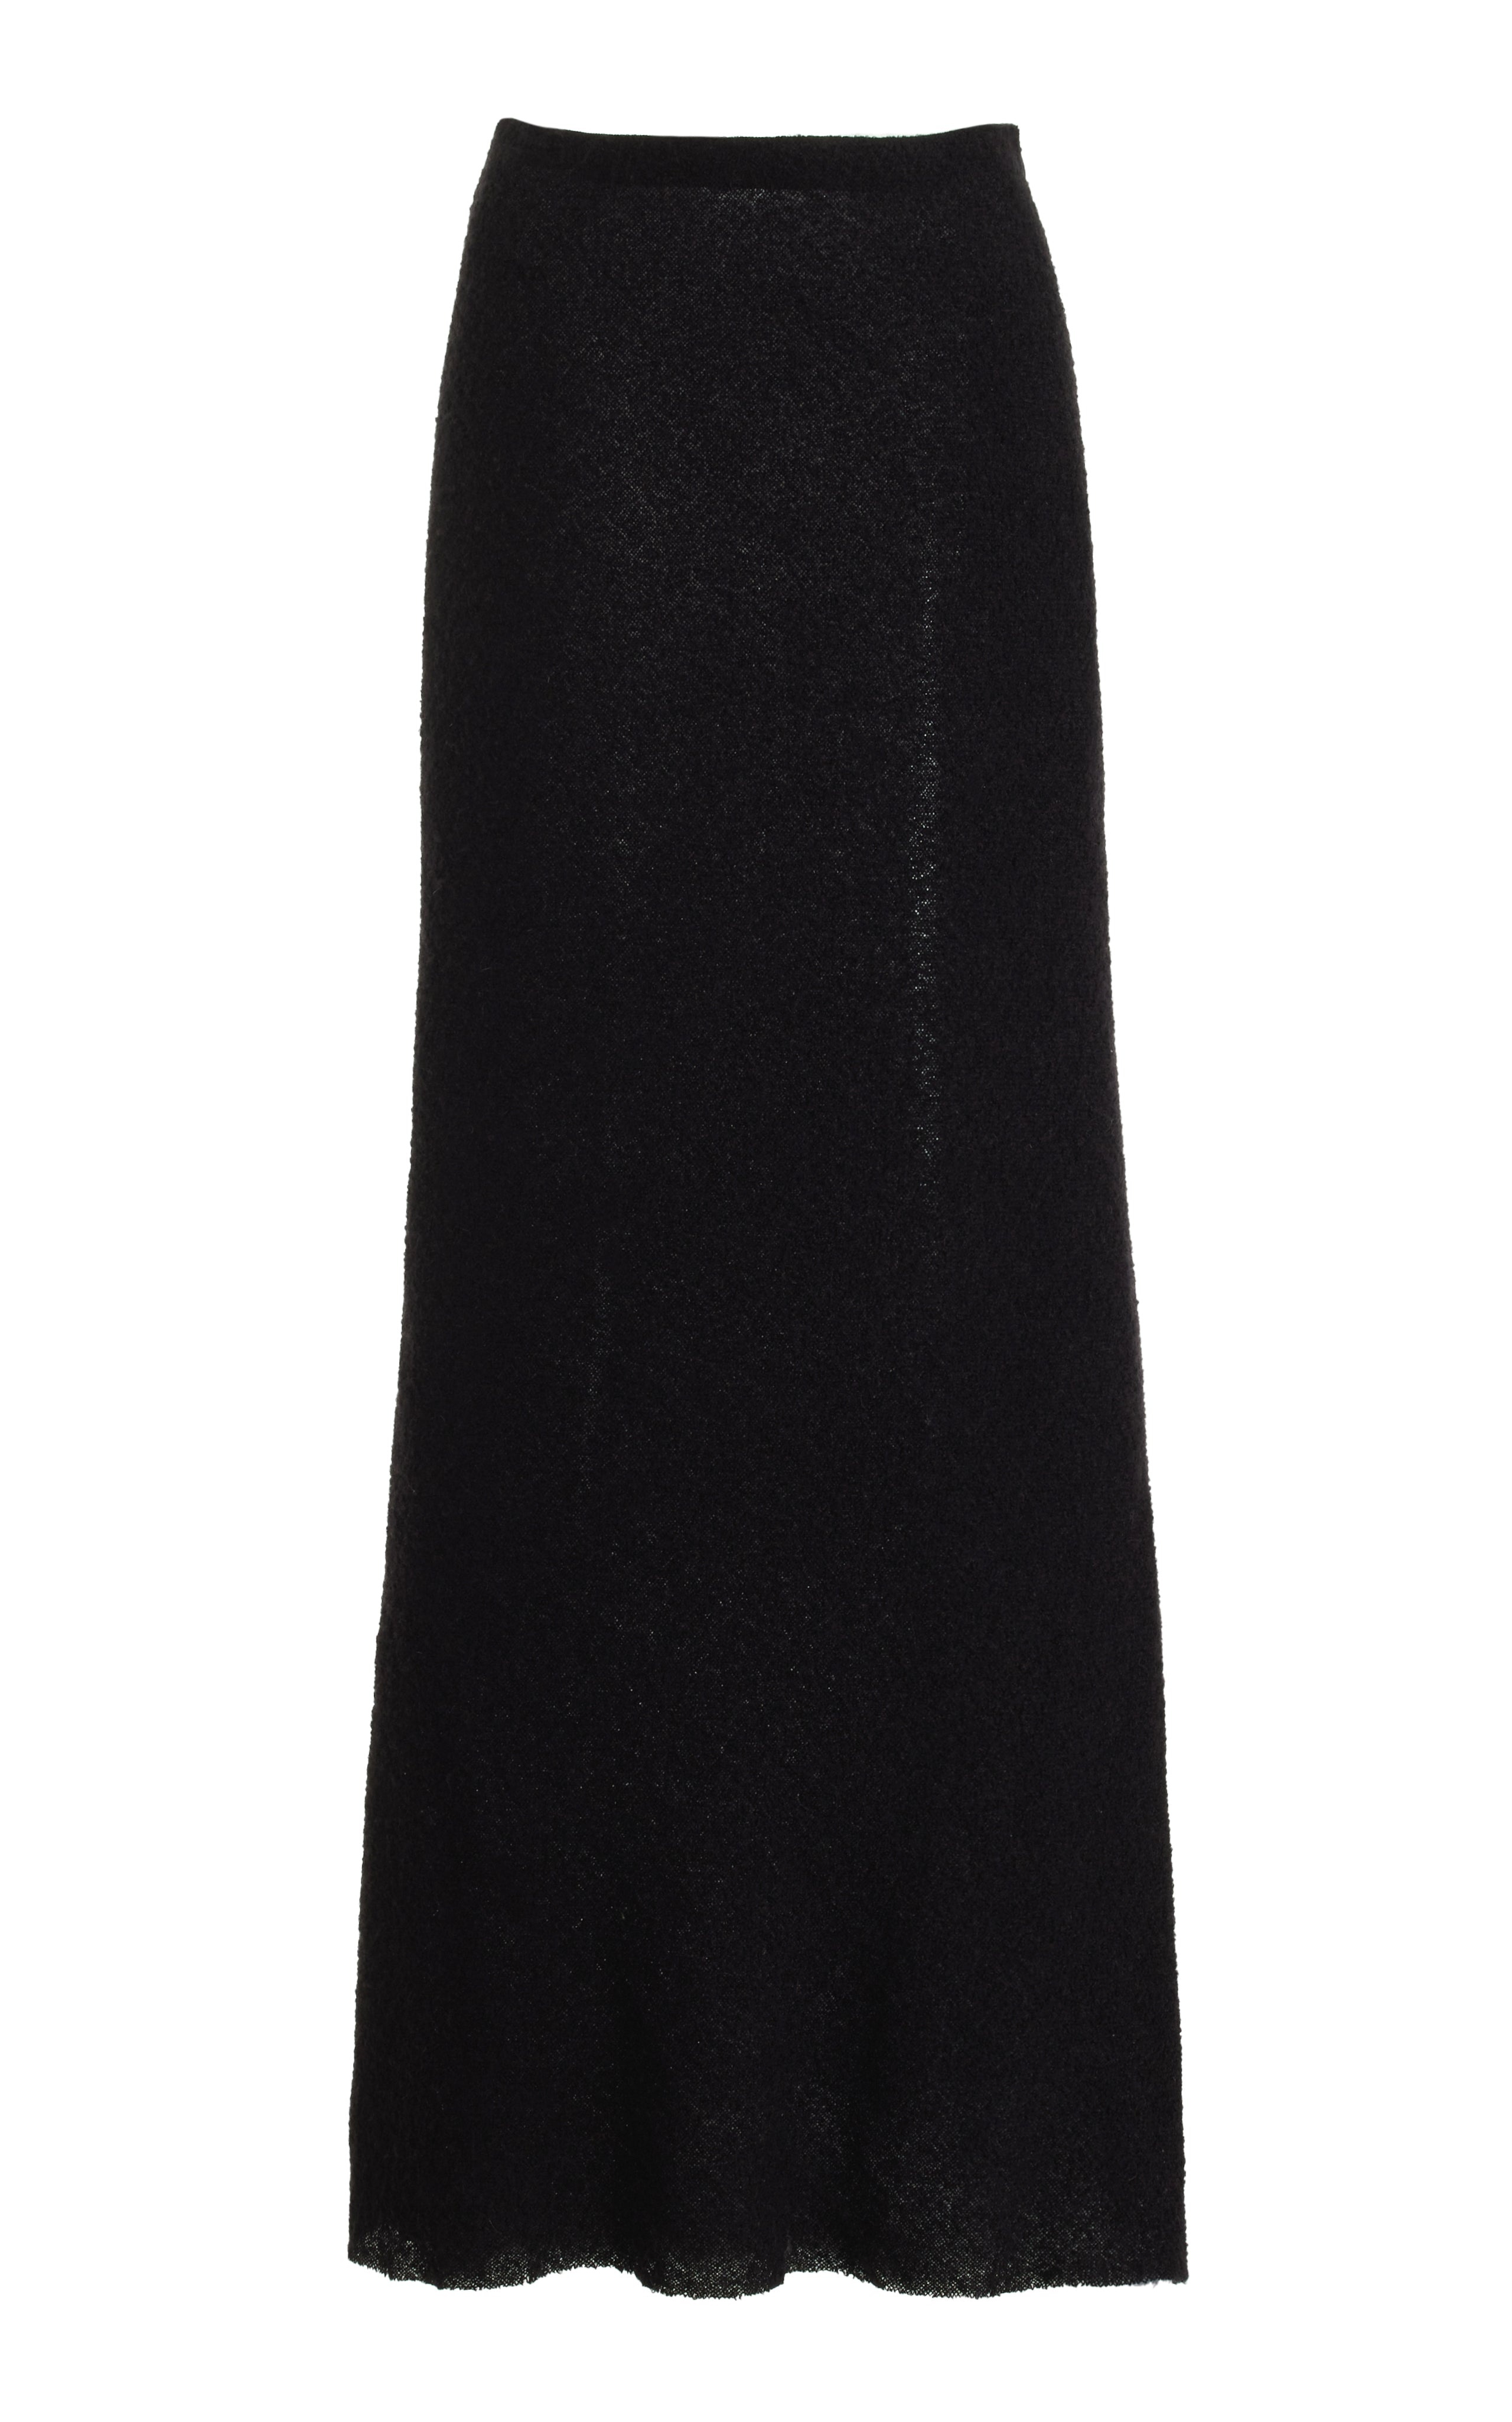 Belo Skirt in Black Boucle Gauze - 1